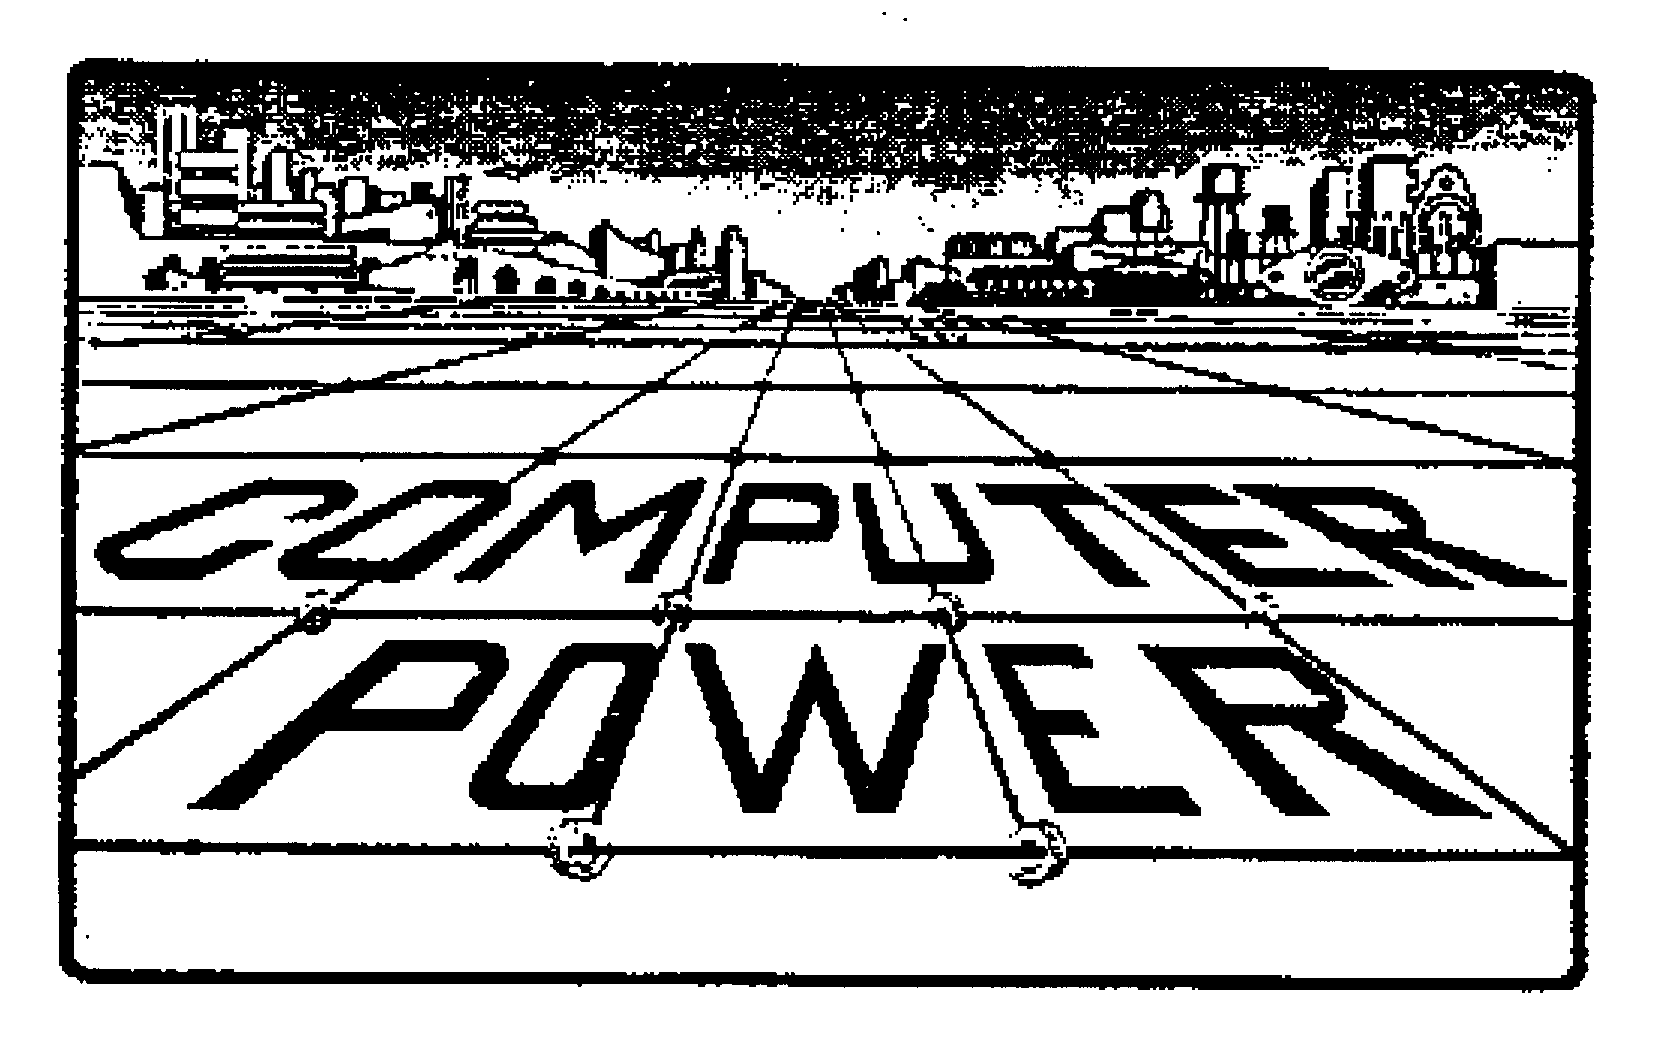  COMPUTER POWER